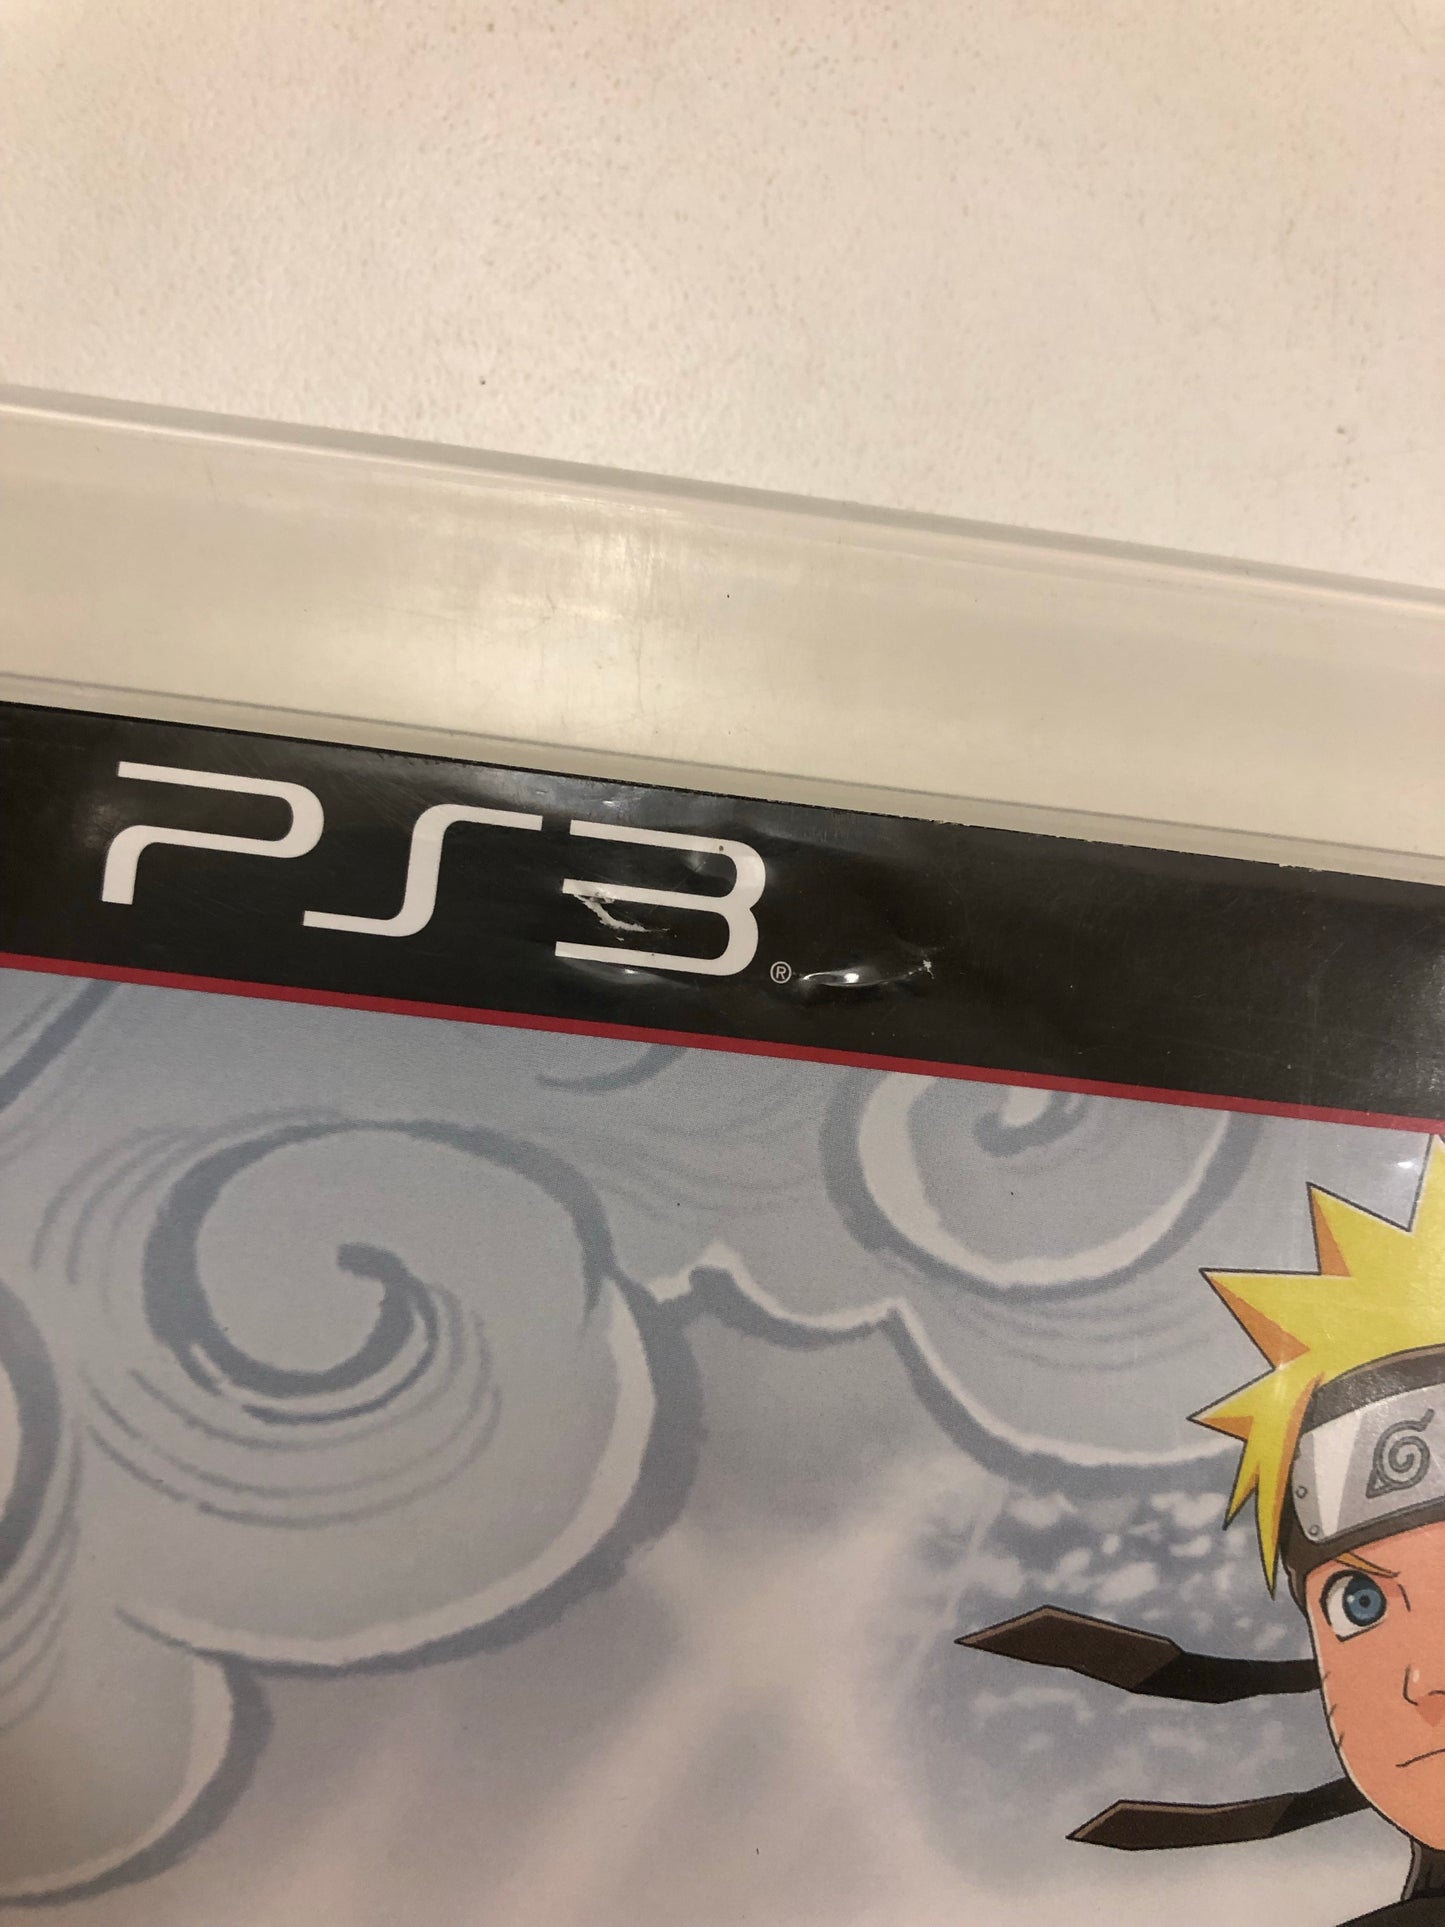 Naruto shippuden ultimate ninja storm collection Sony PS3 avec notice